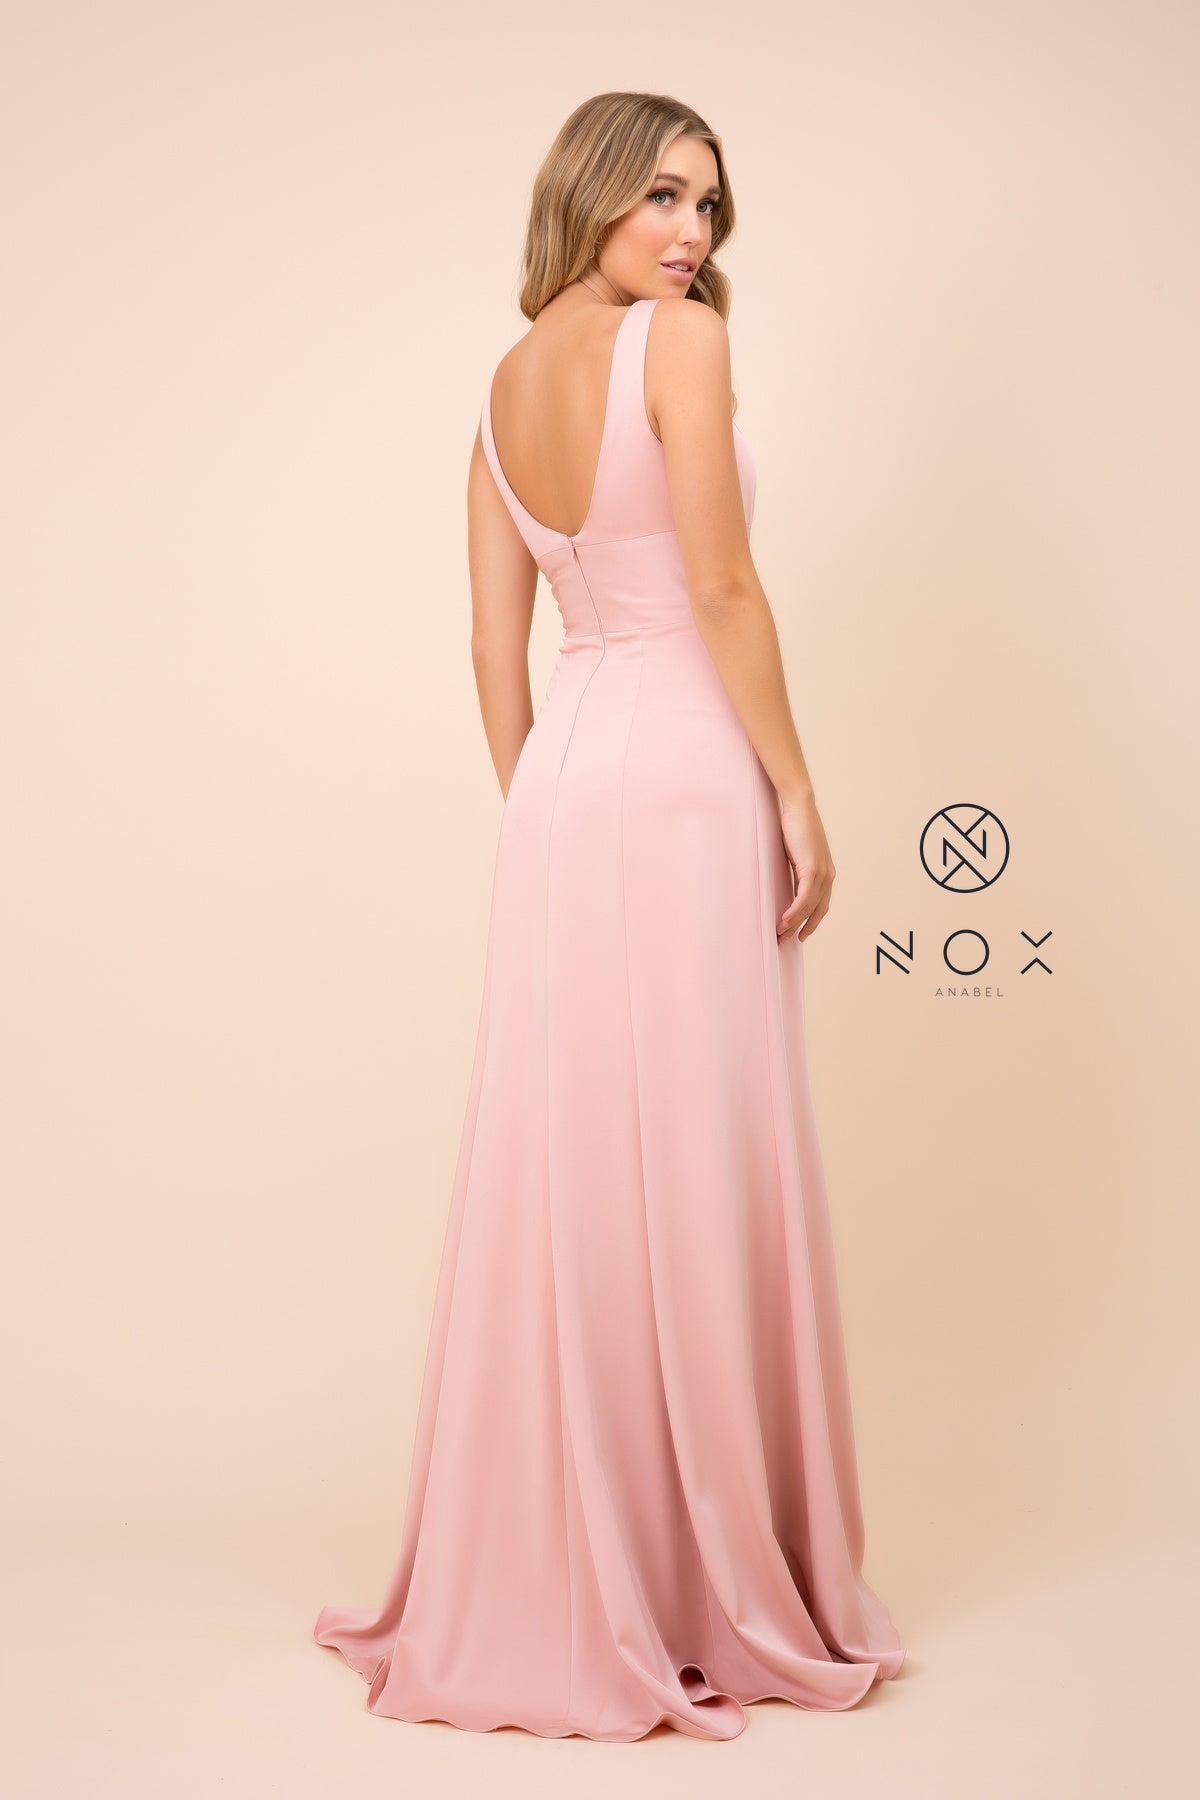 MyFashion.com - ELEGENT PLUNGING V-NECK SHEATH DRESS (Q010) - Nox Anabel promdress eveningdress fashion partydress weddingdress 
 gown homecoming promgown weddinggown 